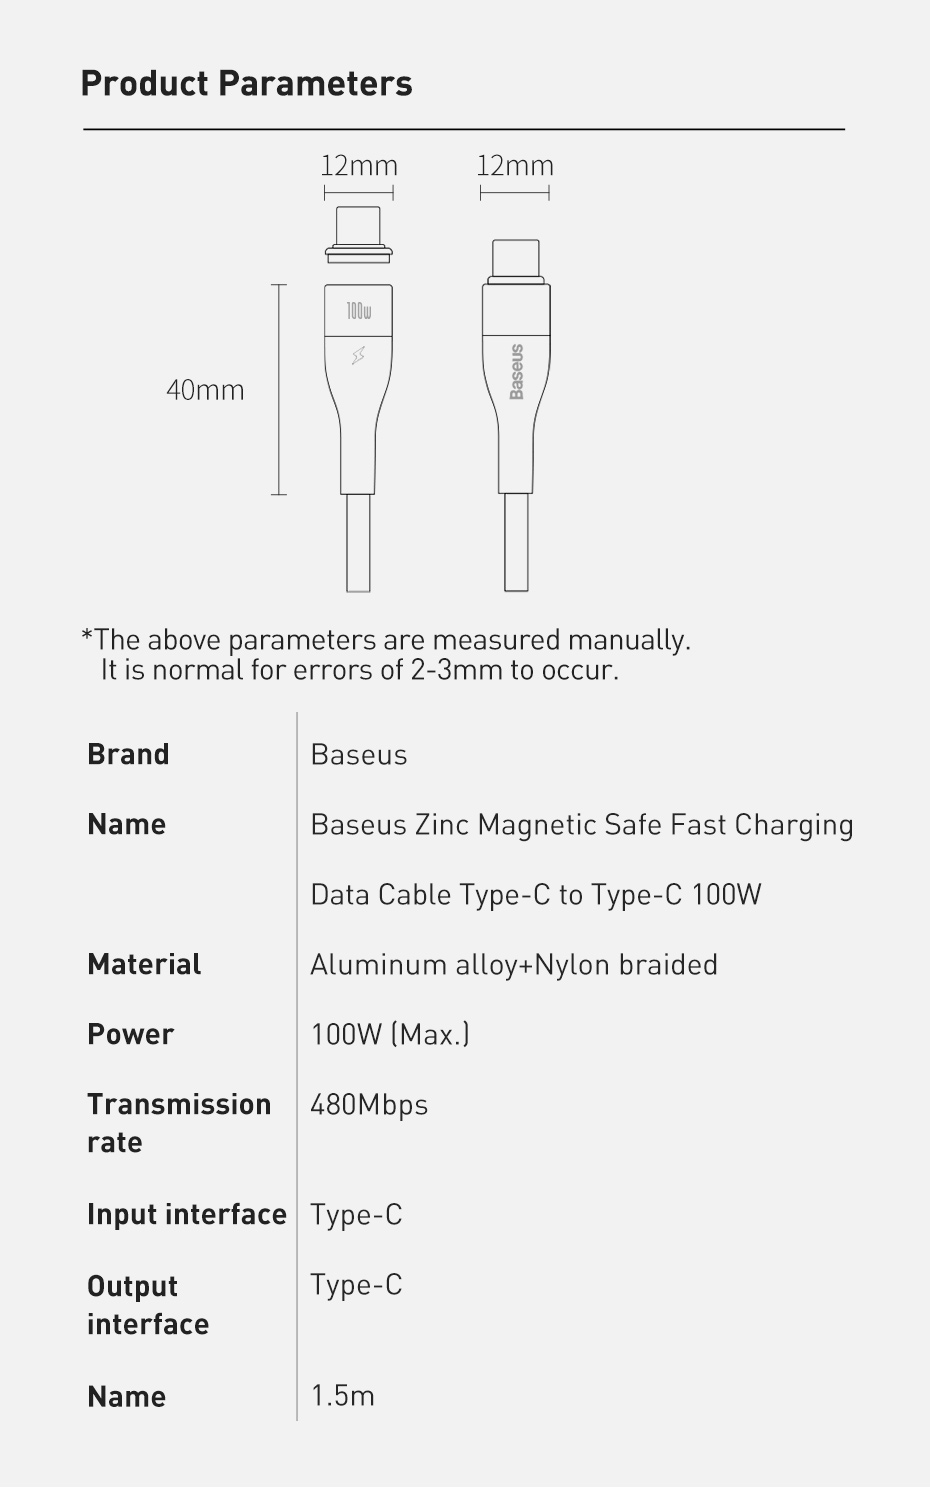 Baseus-100W-Zinc-Magnetic-USB-C-to-USB-C-Data-Cable-PD-QC-Fast-Charging-Data-Transmission-Cord-Line--1753606-15